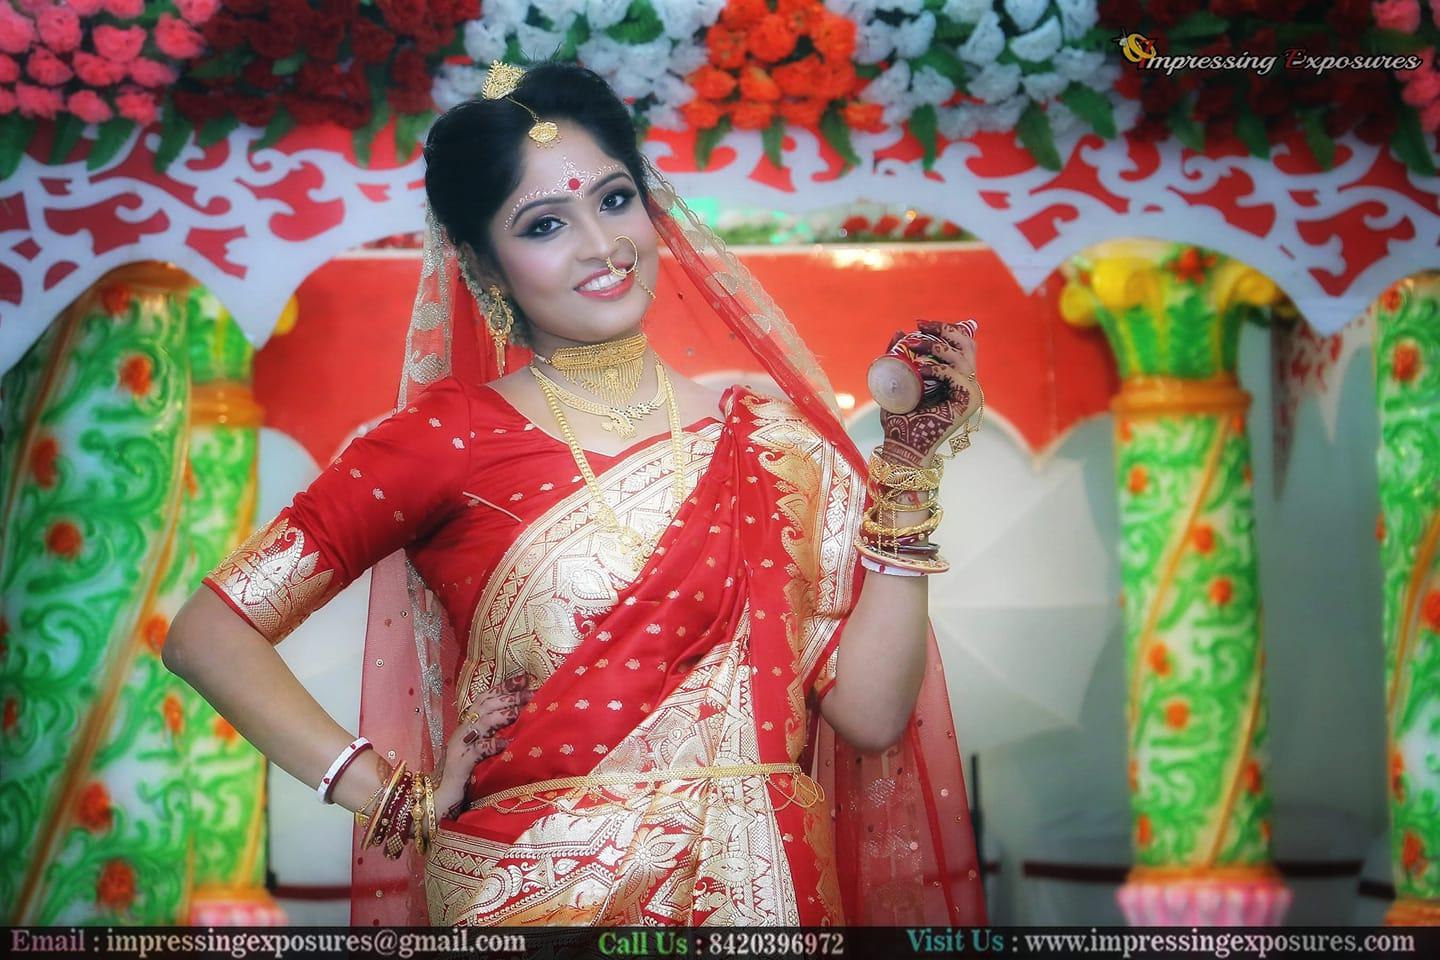 Impressing Exposures Wedding Photographer, Kolkata